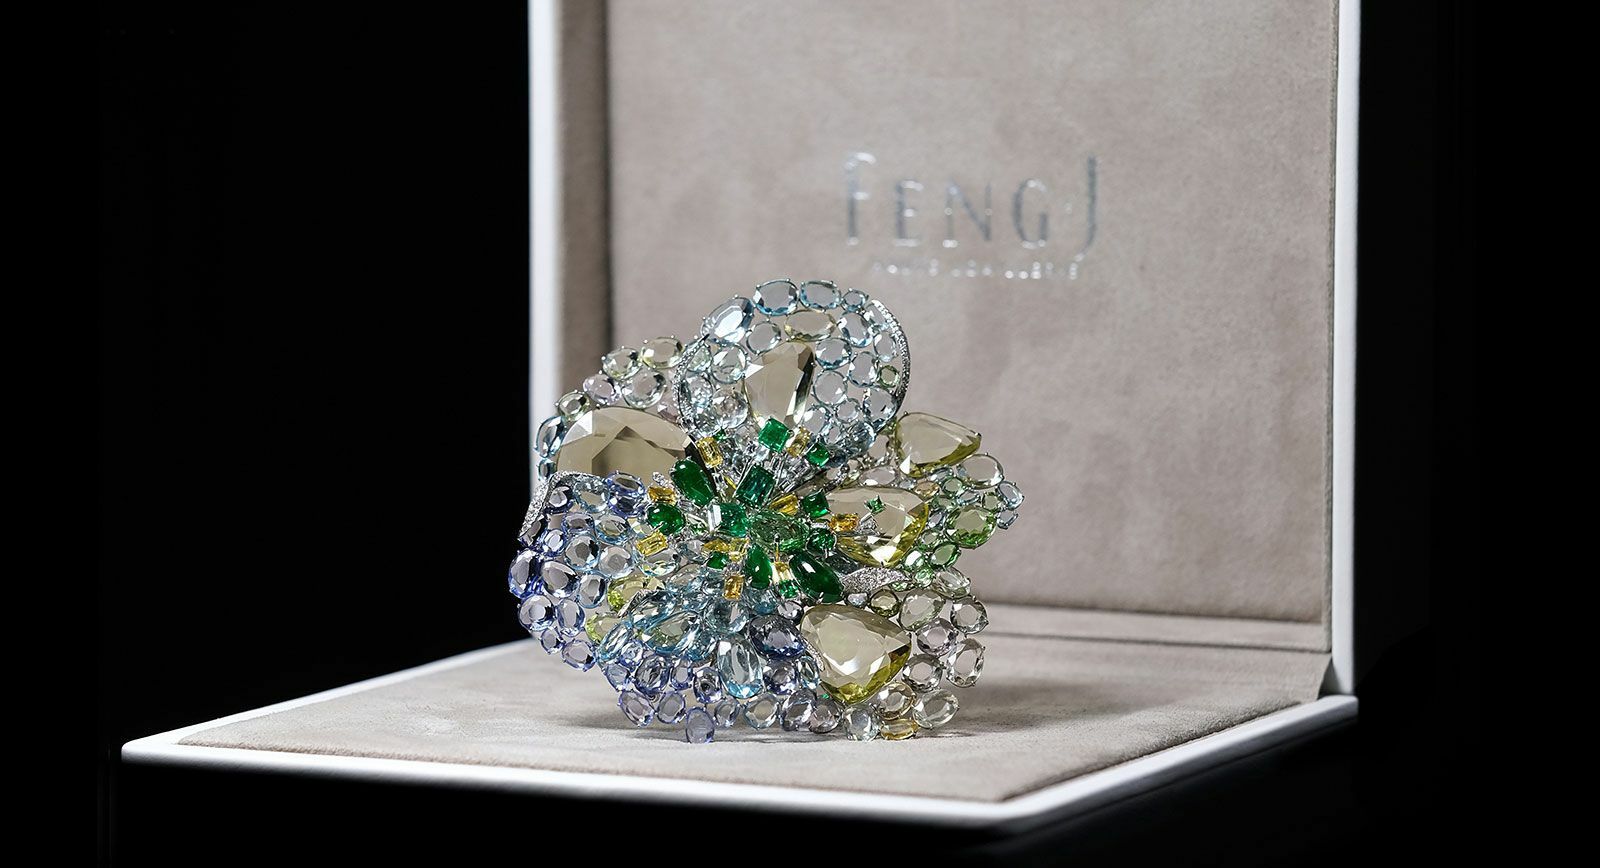 Feng J floating setting jewellery 